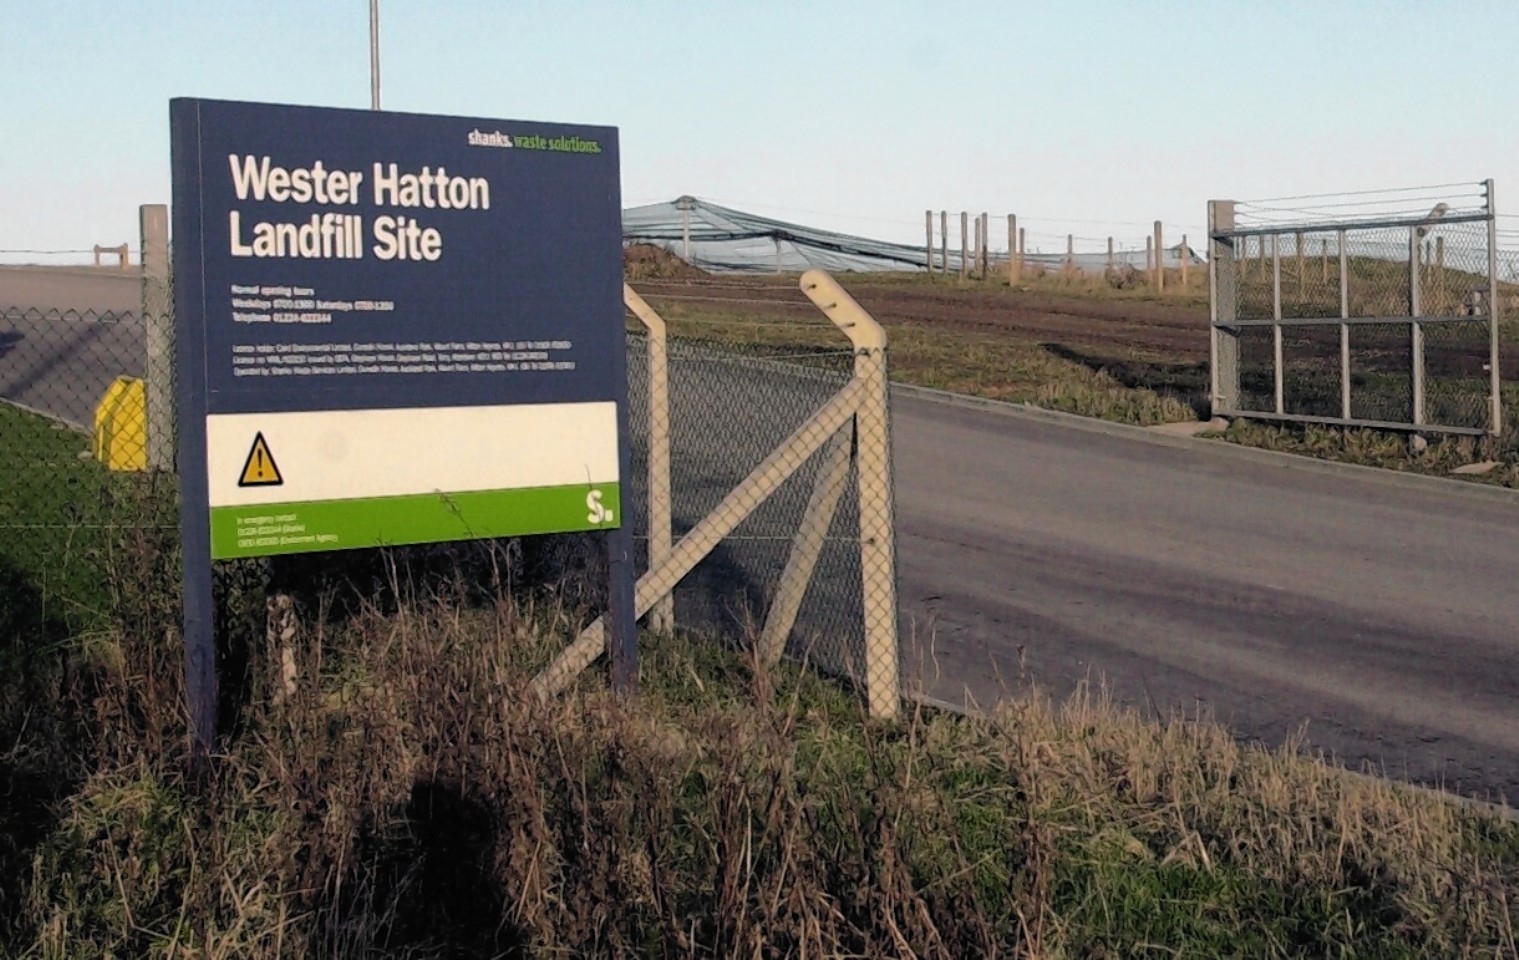 Wester Hatton landfill, near Balmedie